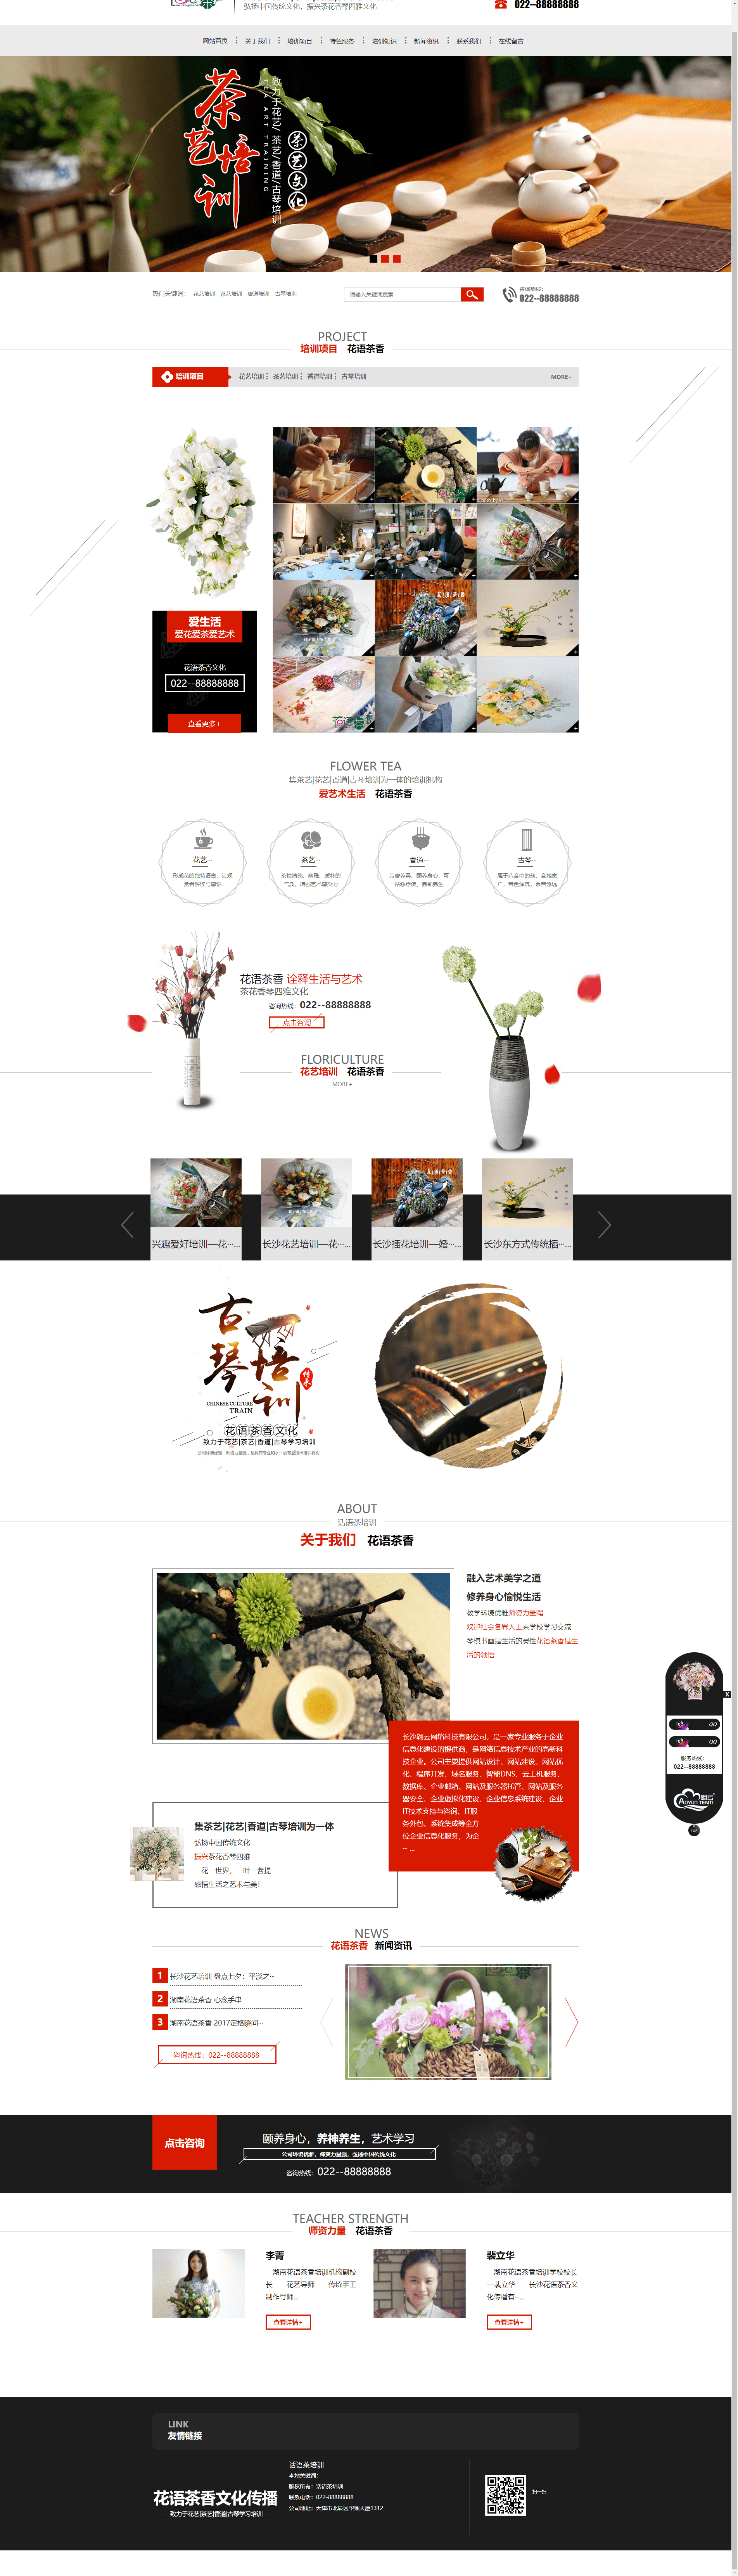 Pbootcms茶艺插画艺术培训网站模板